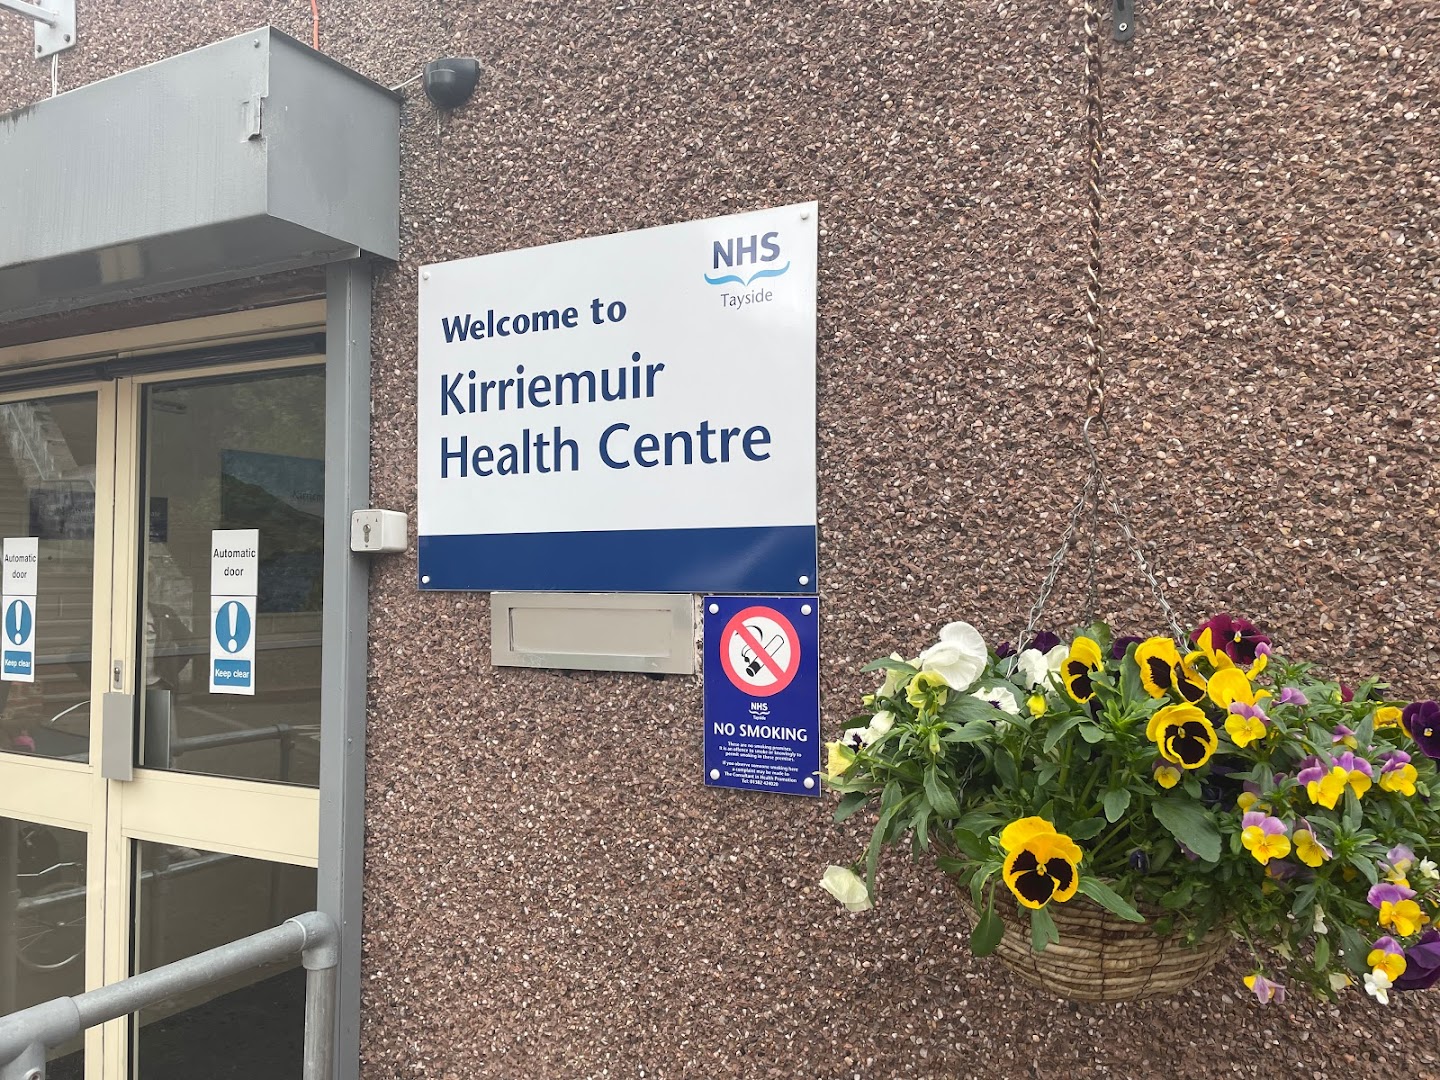 Kirriemuir Health Centre